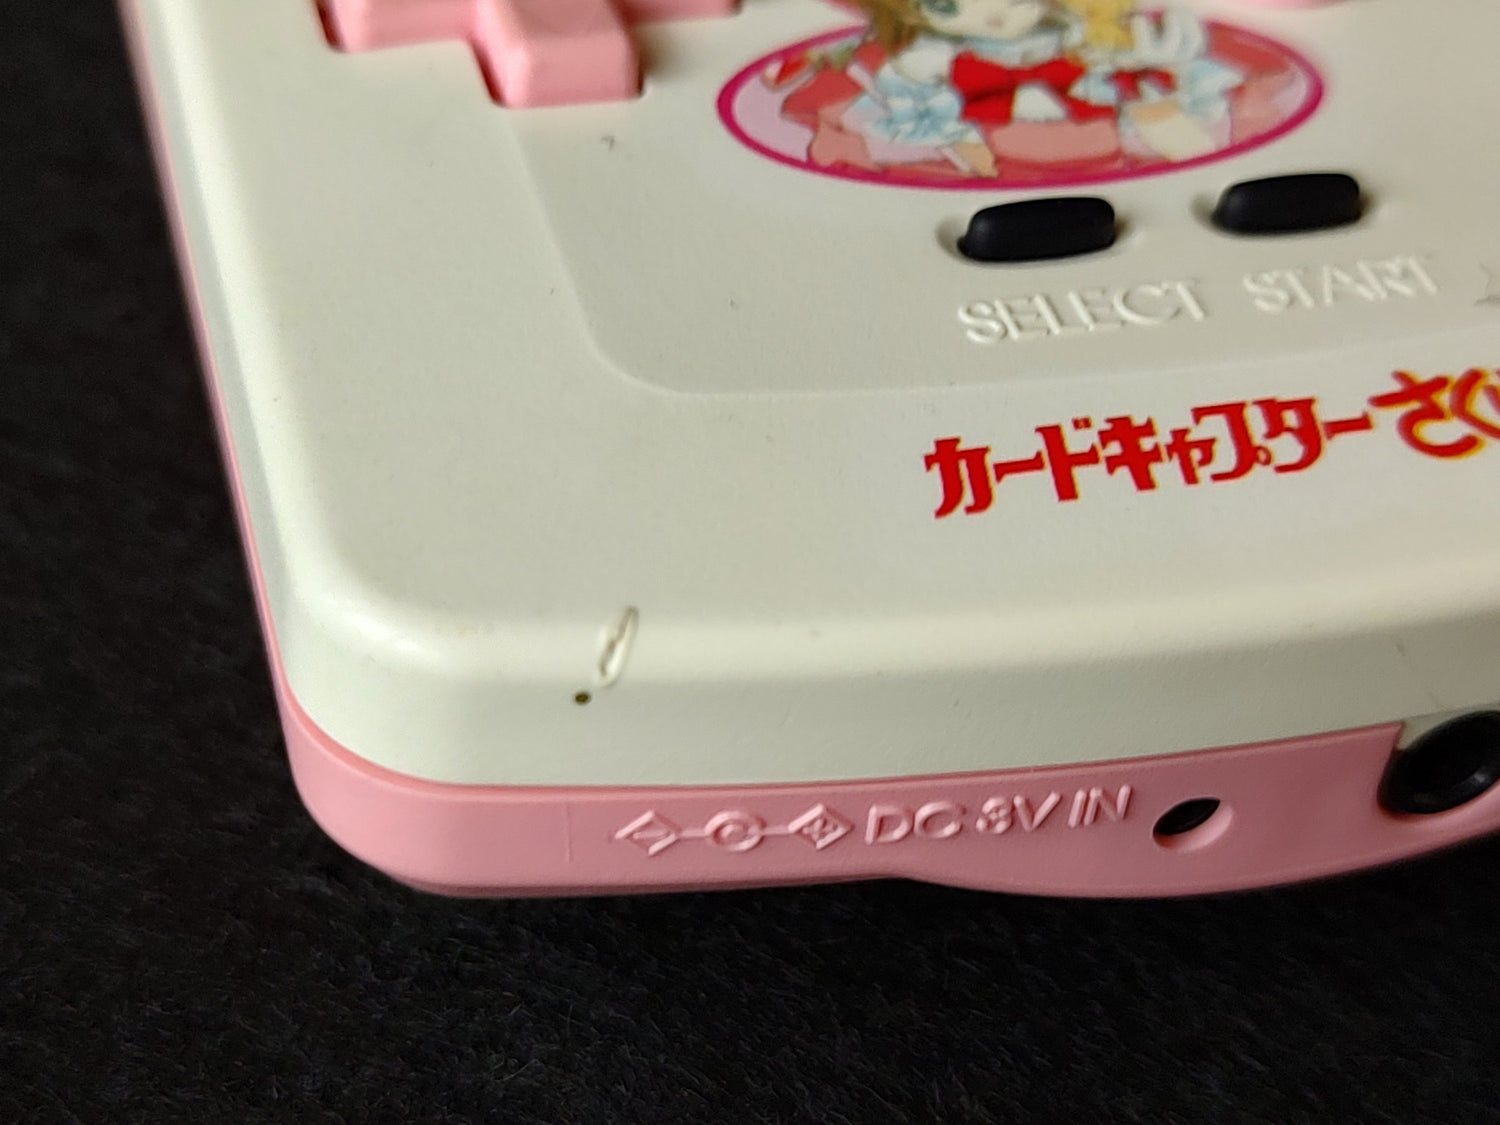 Nintendo Game Boy Color - Cardcaptor Sakura LIMITED EDITION